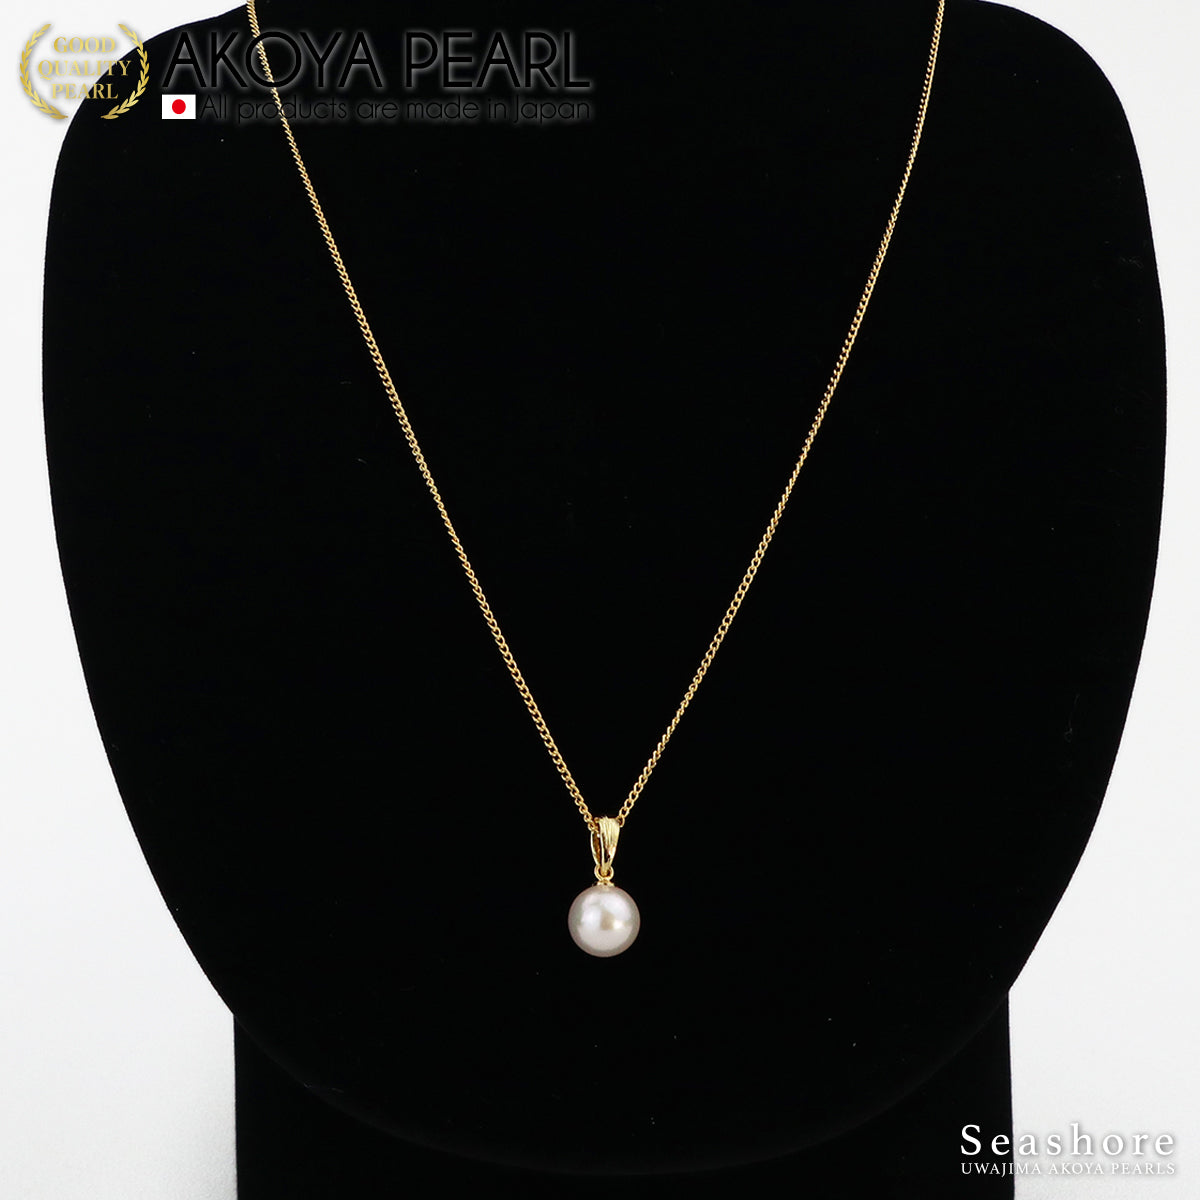 Akoya pearl Vatican pendant [8.0-8.5mm] Brass rhodium / gold Akoya pearl pearl necklace [2 colors]